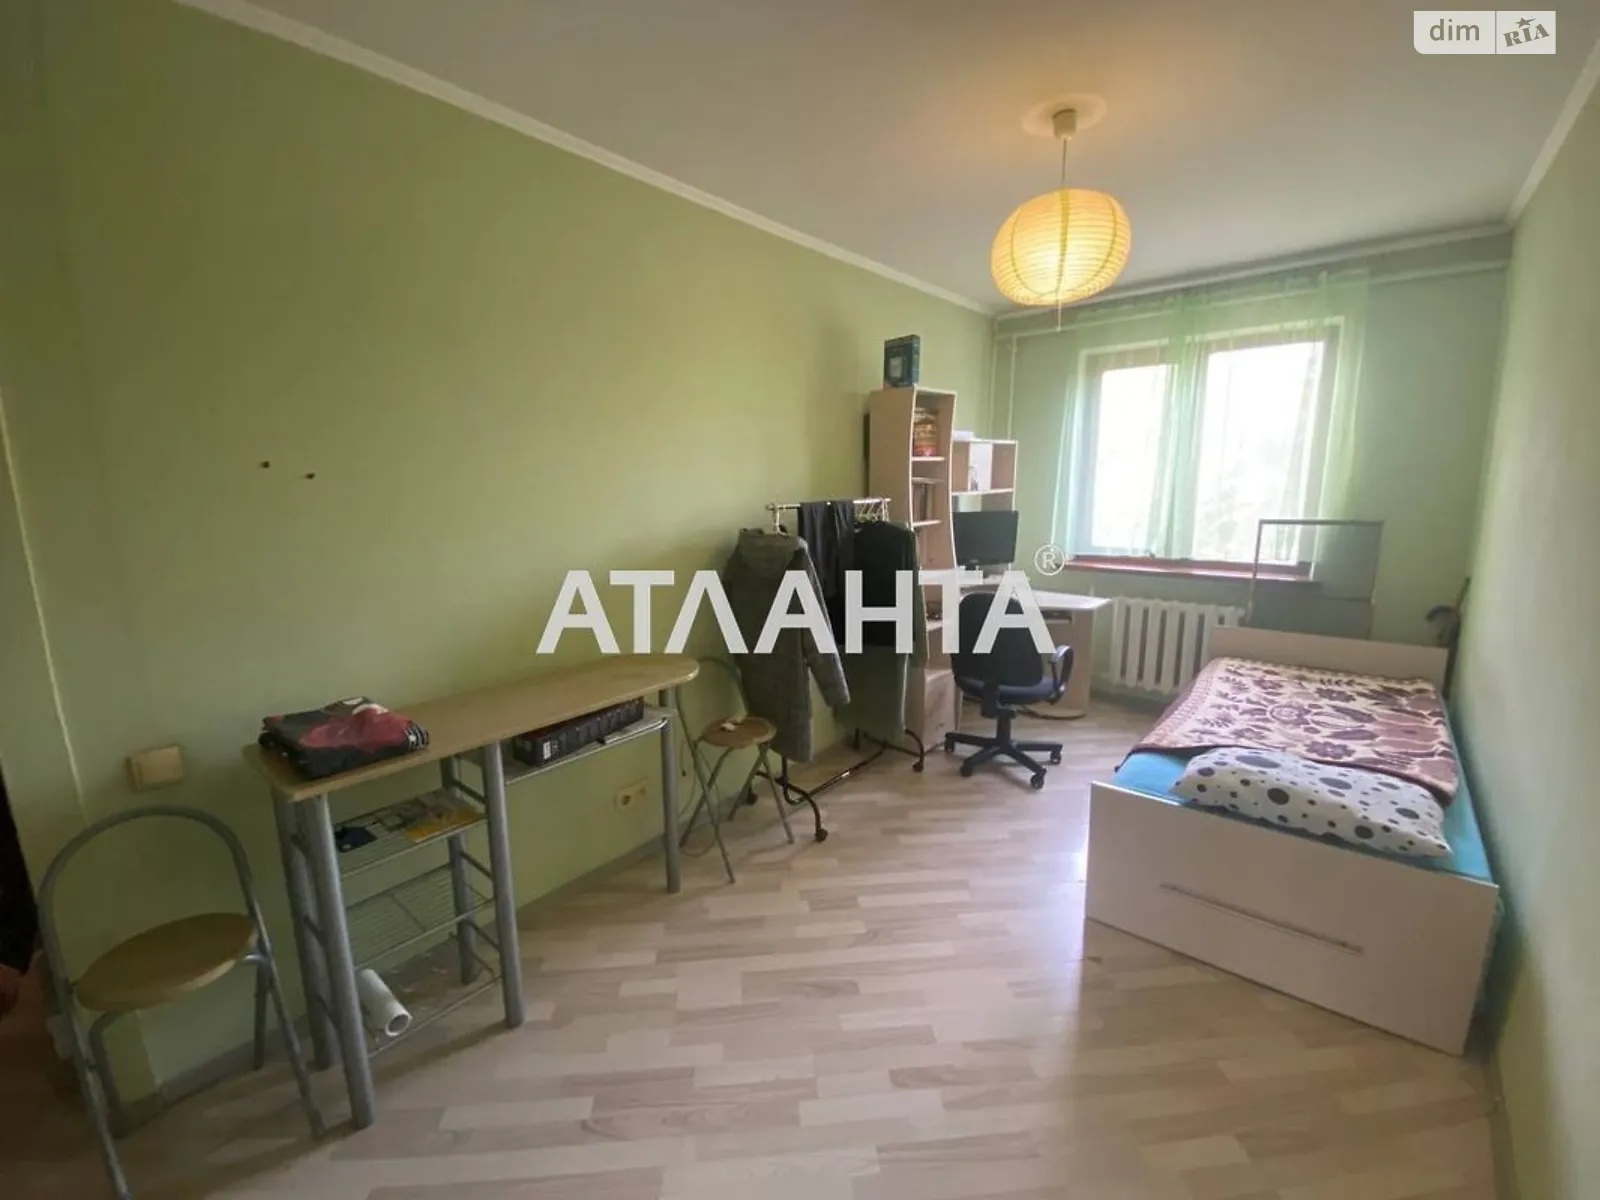 Продается комната 13.6 кв. м в Одессе, цена: 11500 $ - фото 1